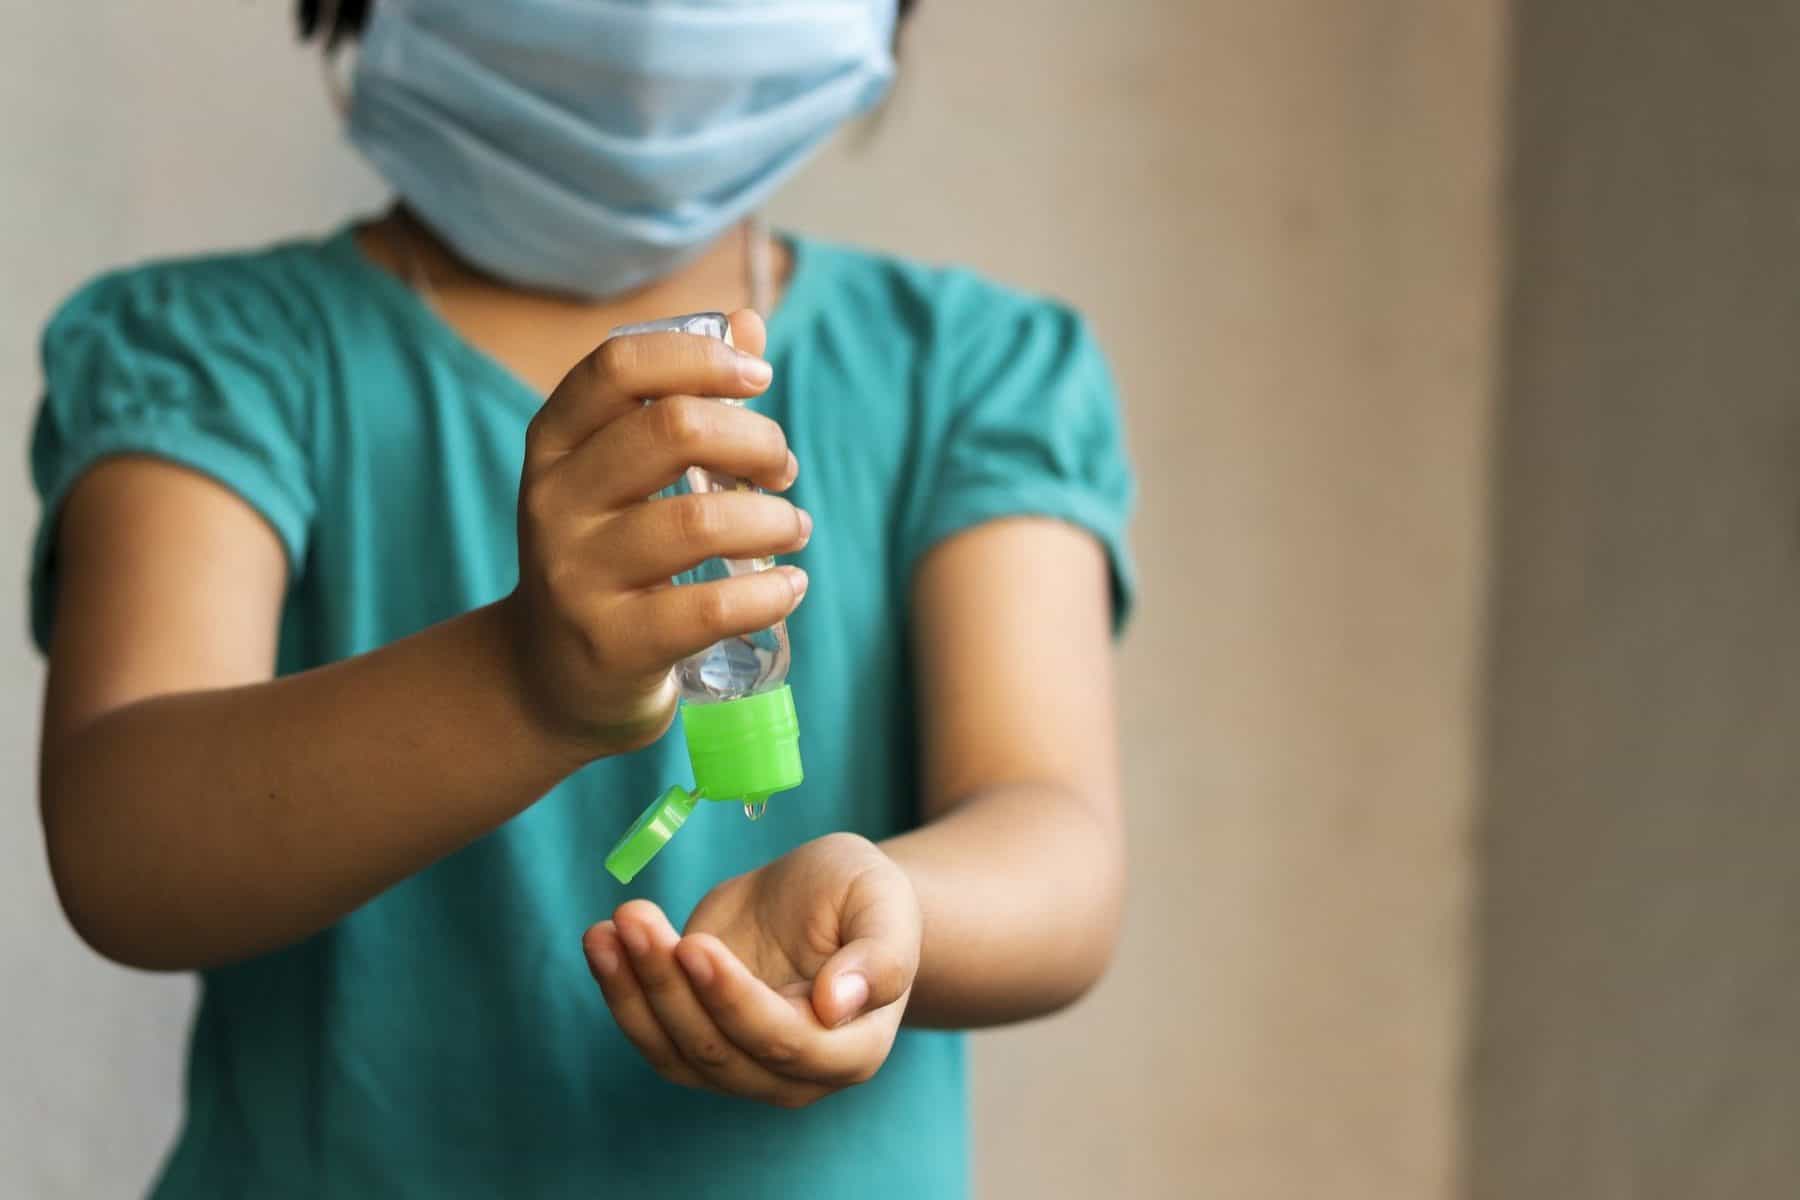 Child wearing medical face mask applies hand sanitizer